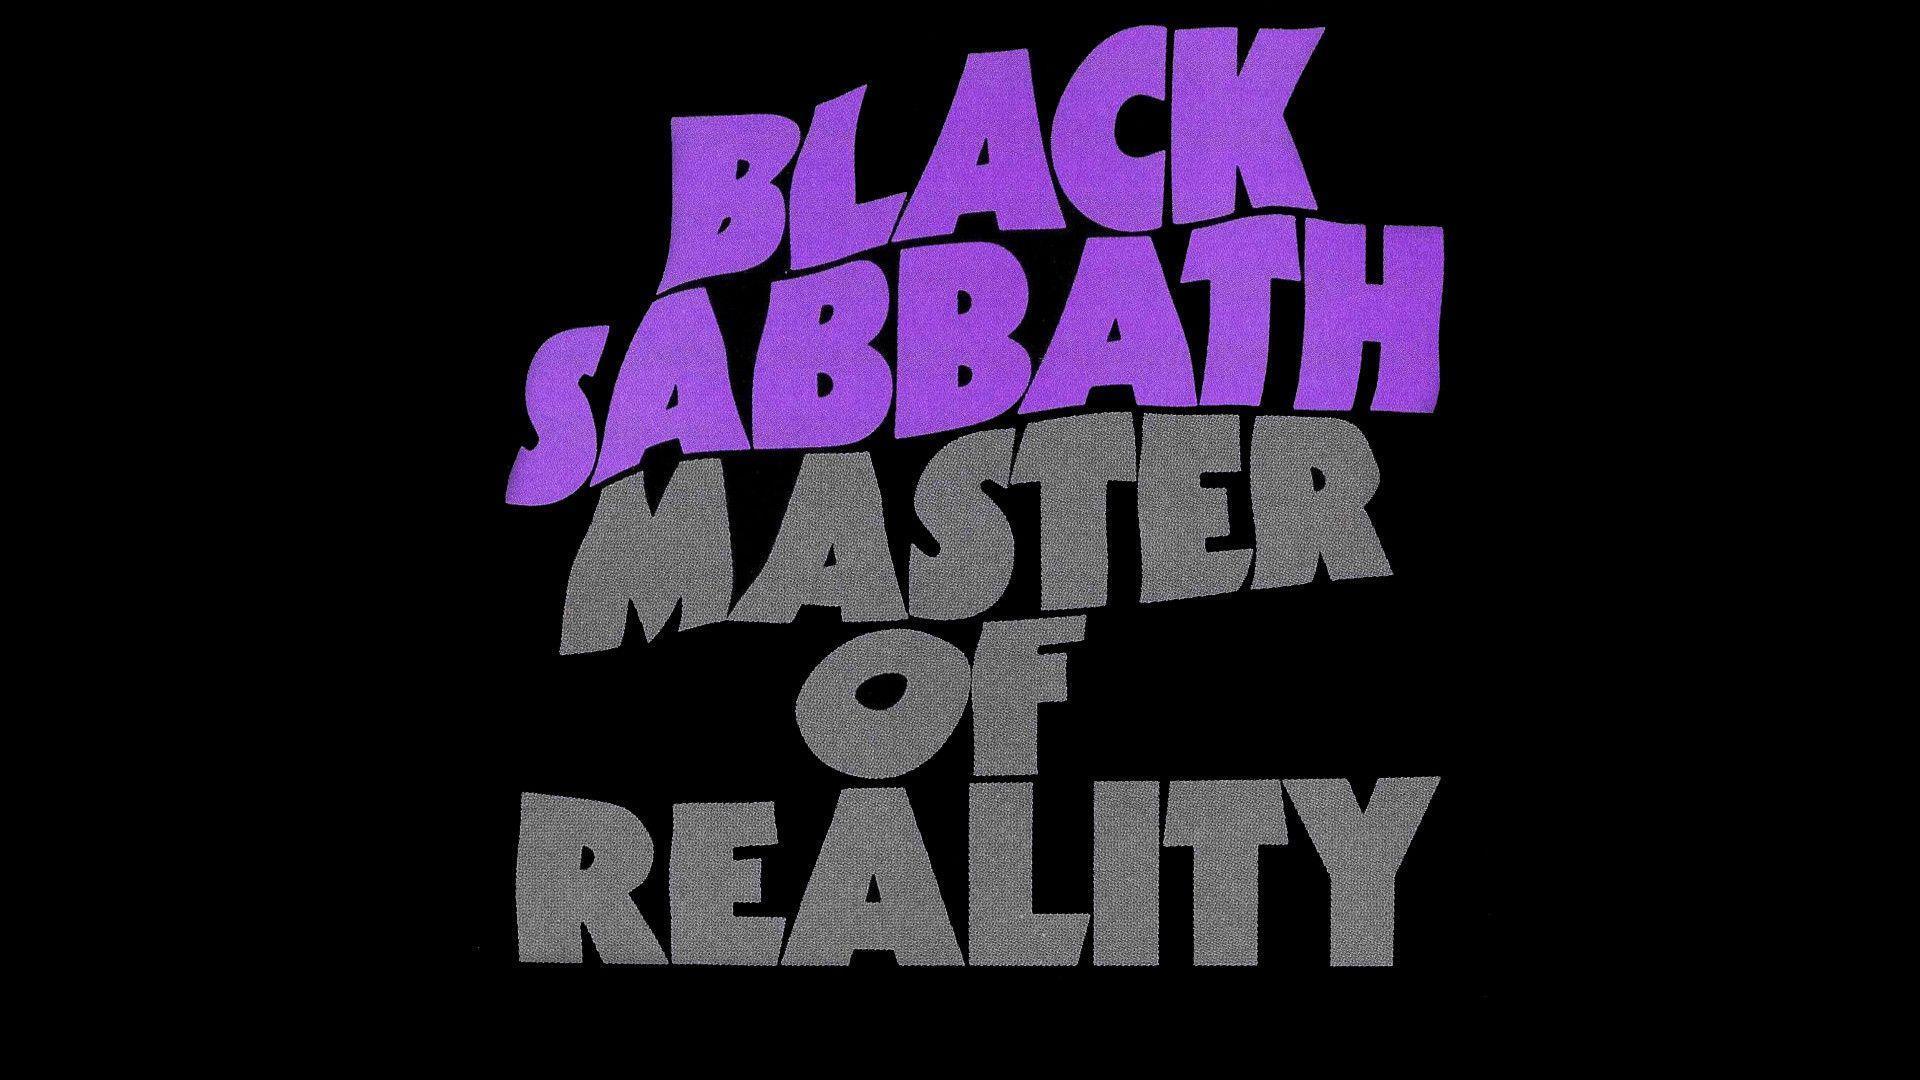 Black Sabbath HD Wallpapers